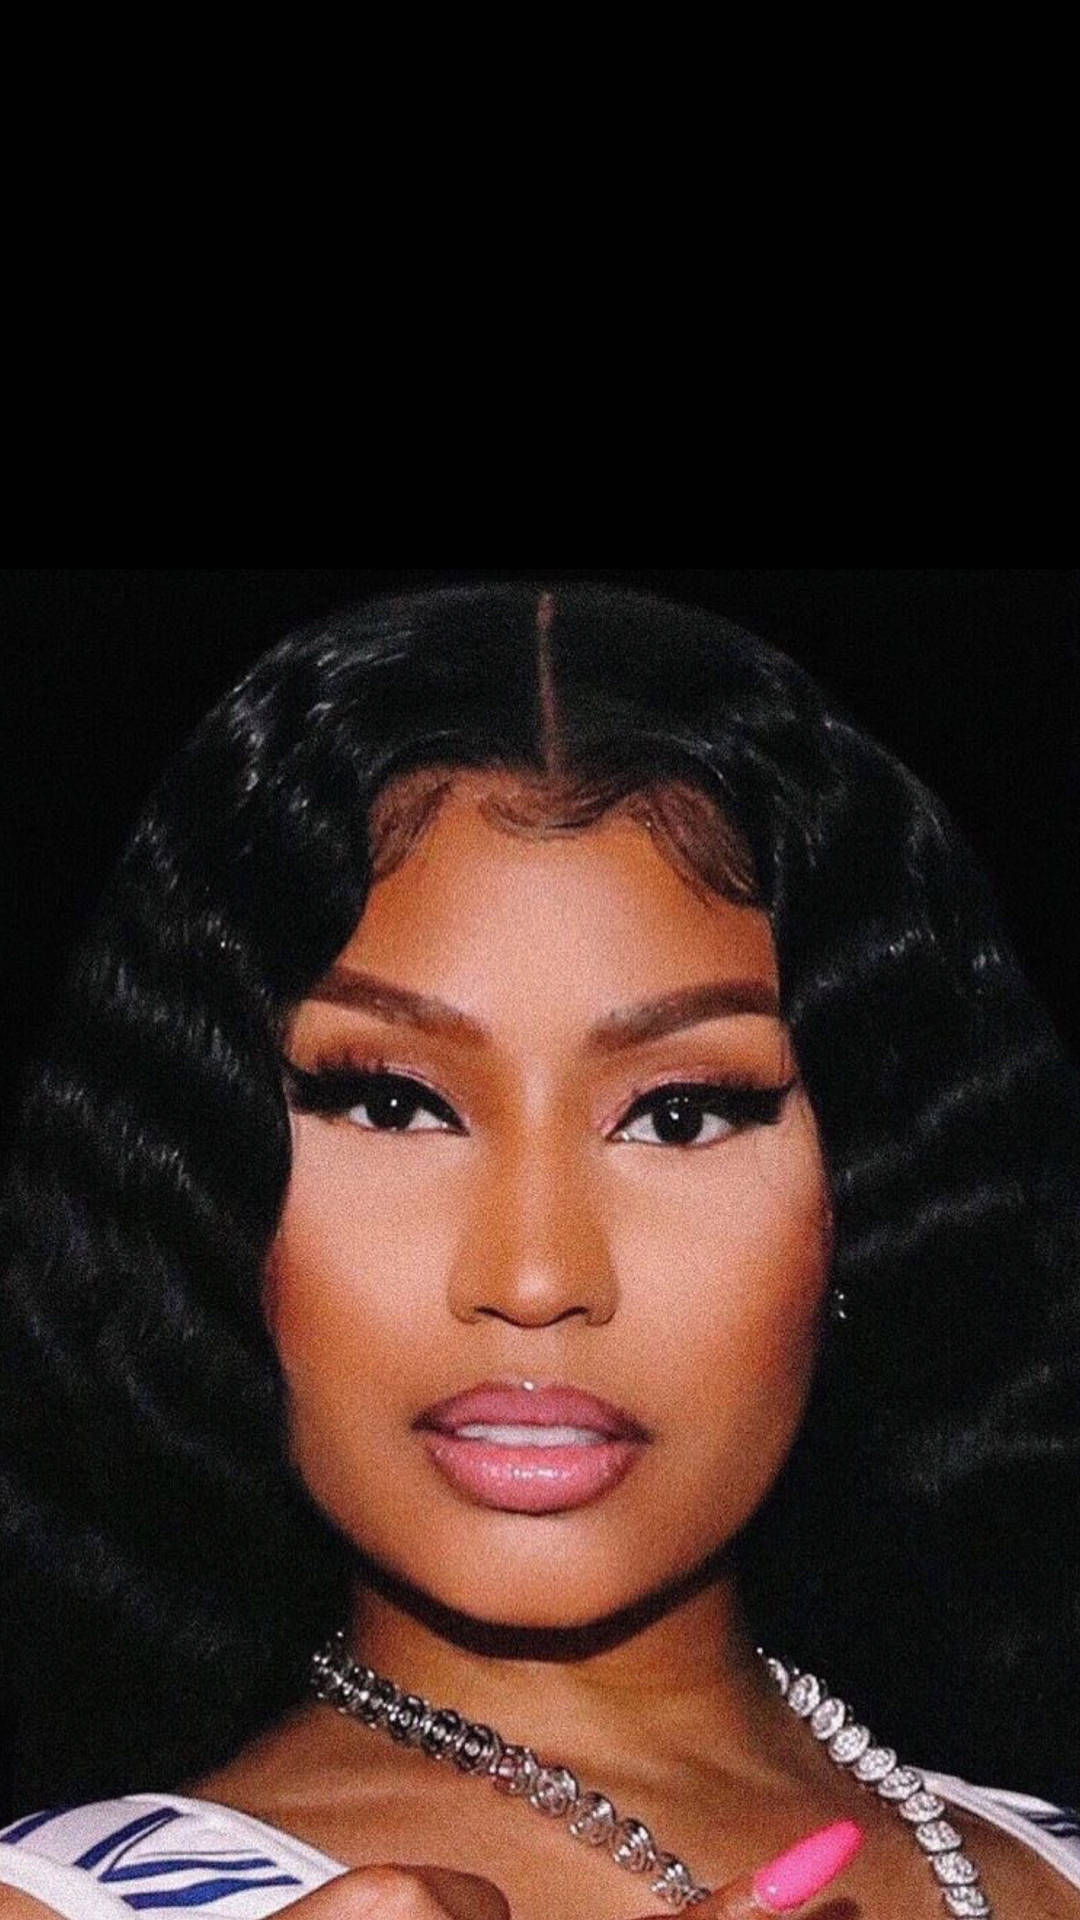 Nicki Minaj Close-up Image Background